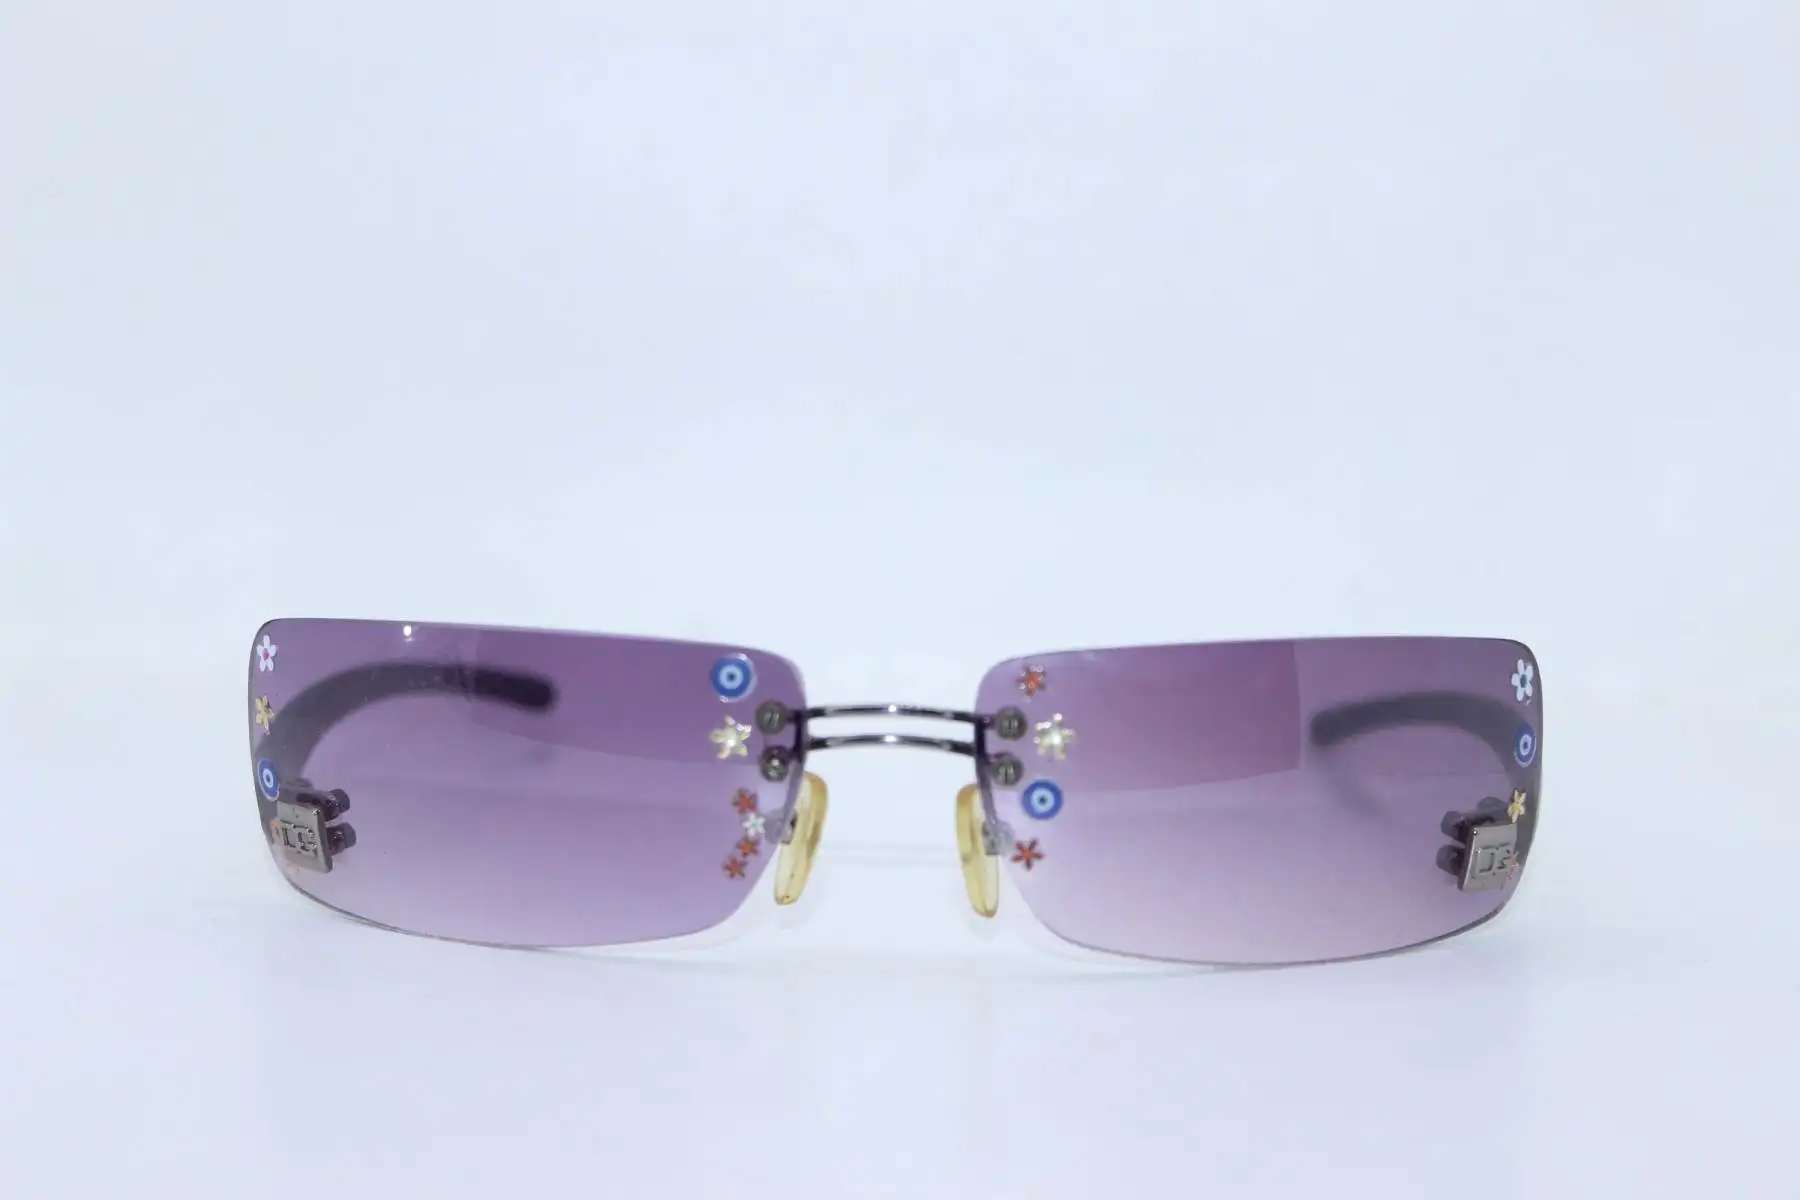 

Dolce & Gabbana vintage women's sunglasses I Retro sunglasses I Vintage unisex sunglasses NOS vintage